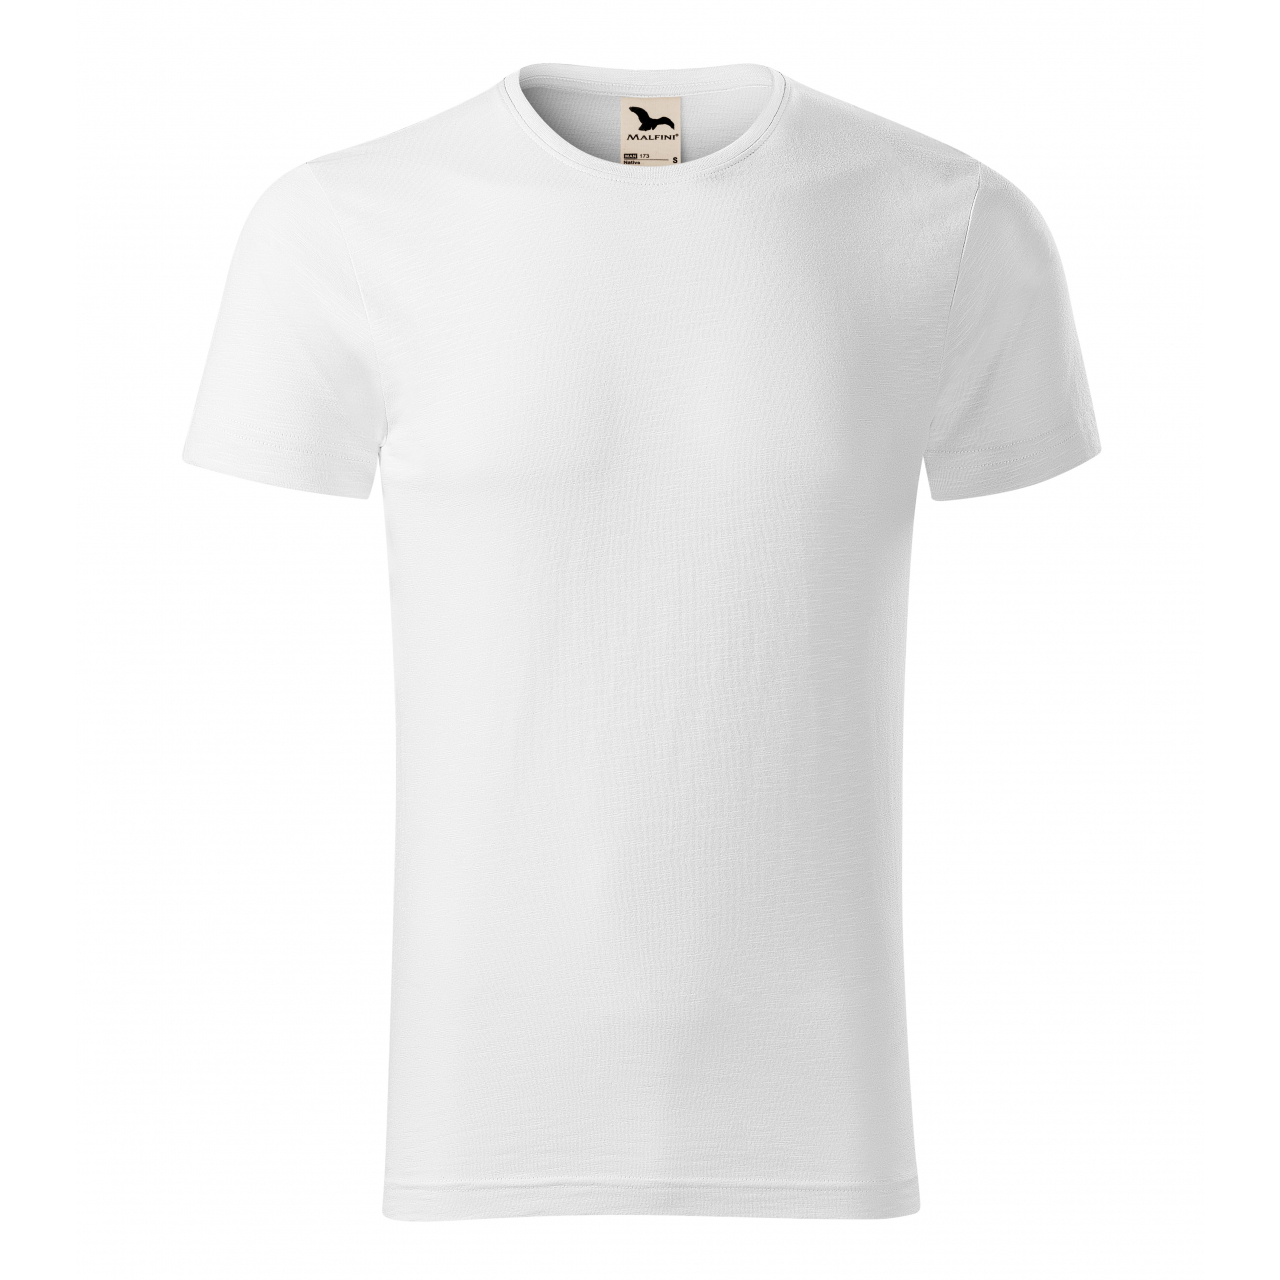 Tričko pánské Malfini Native - bílé, XL